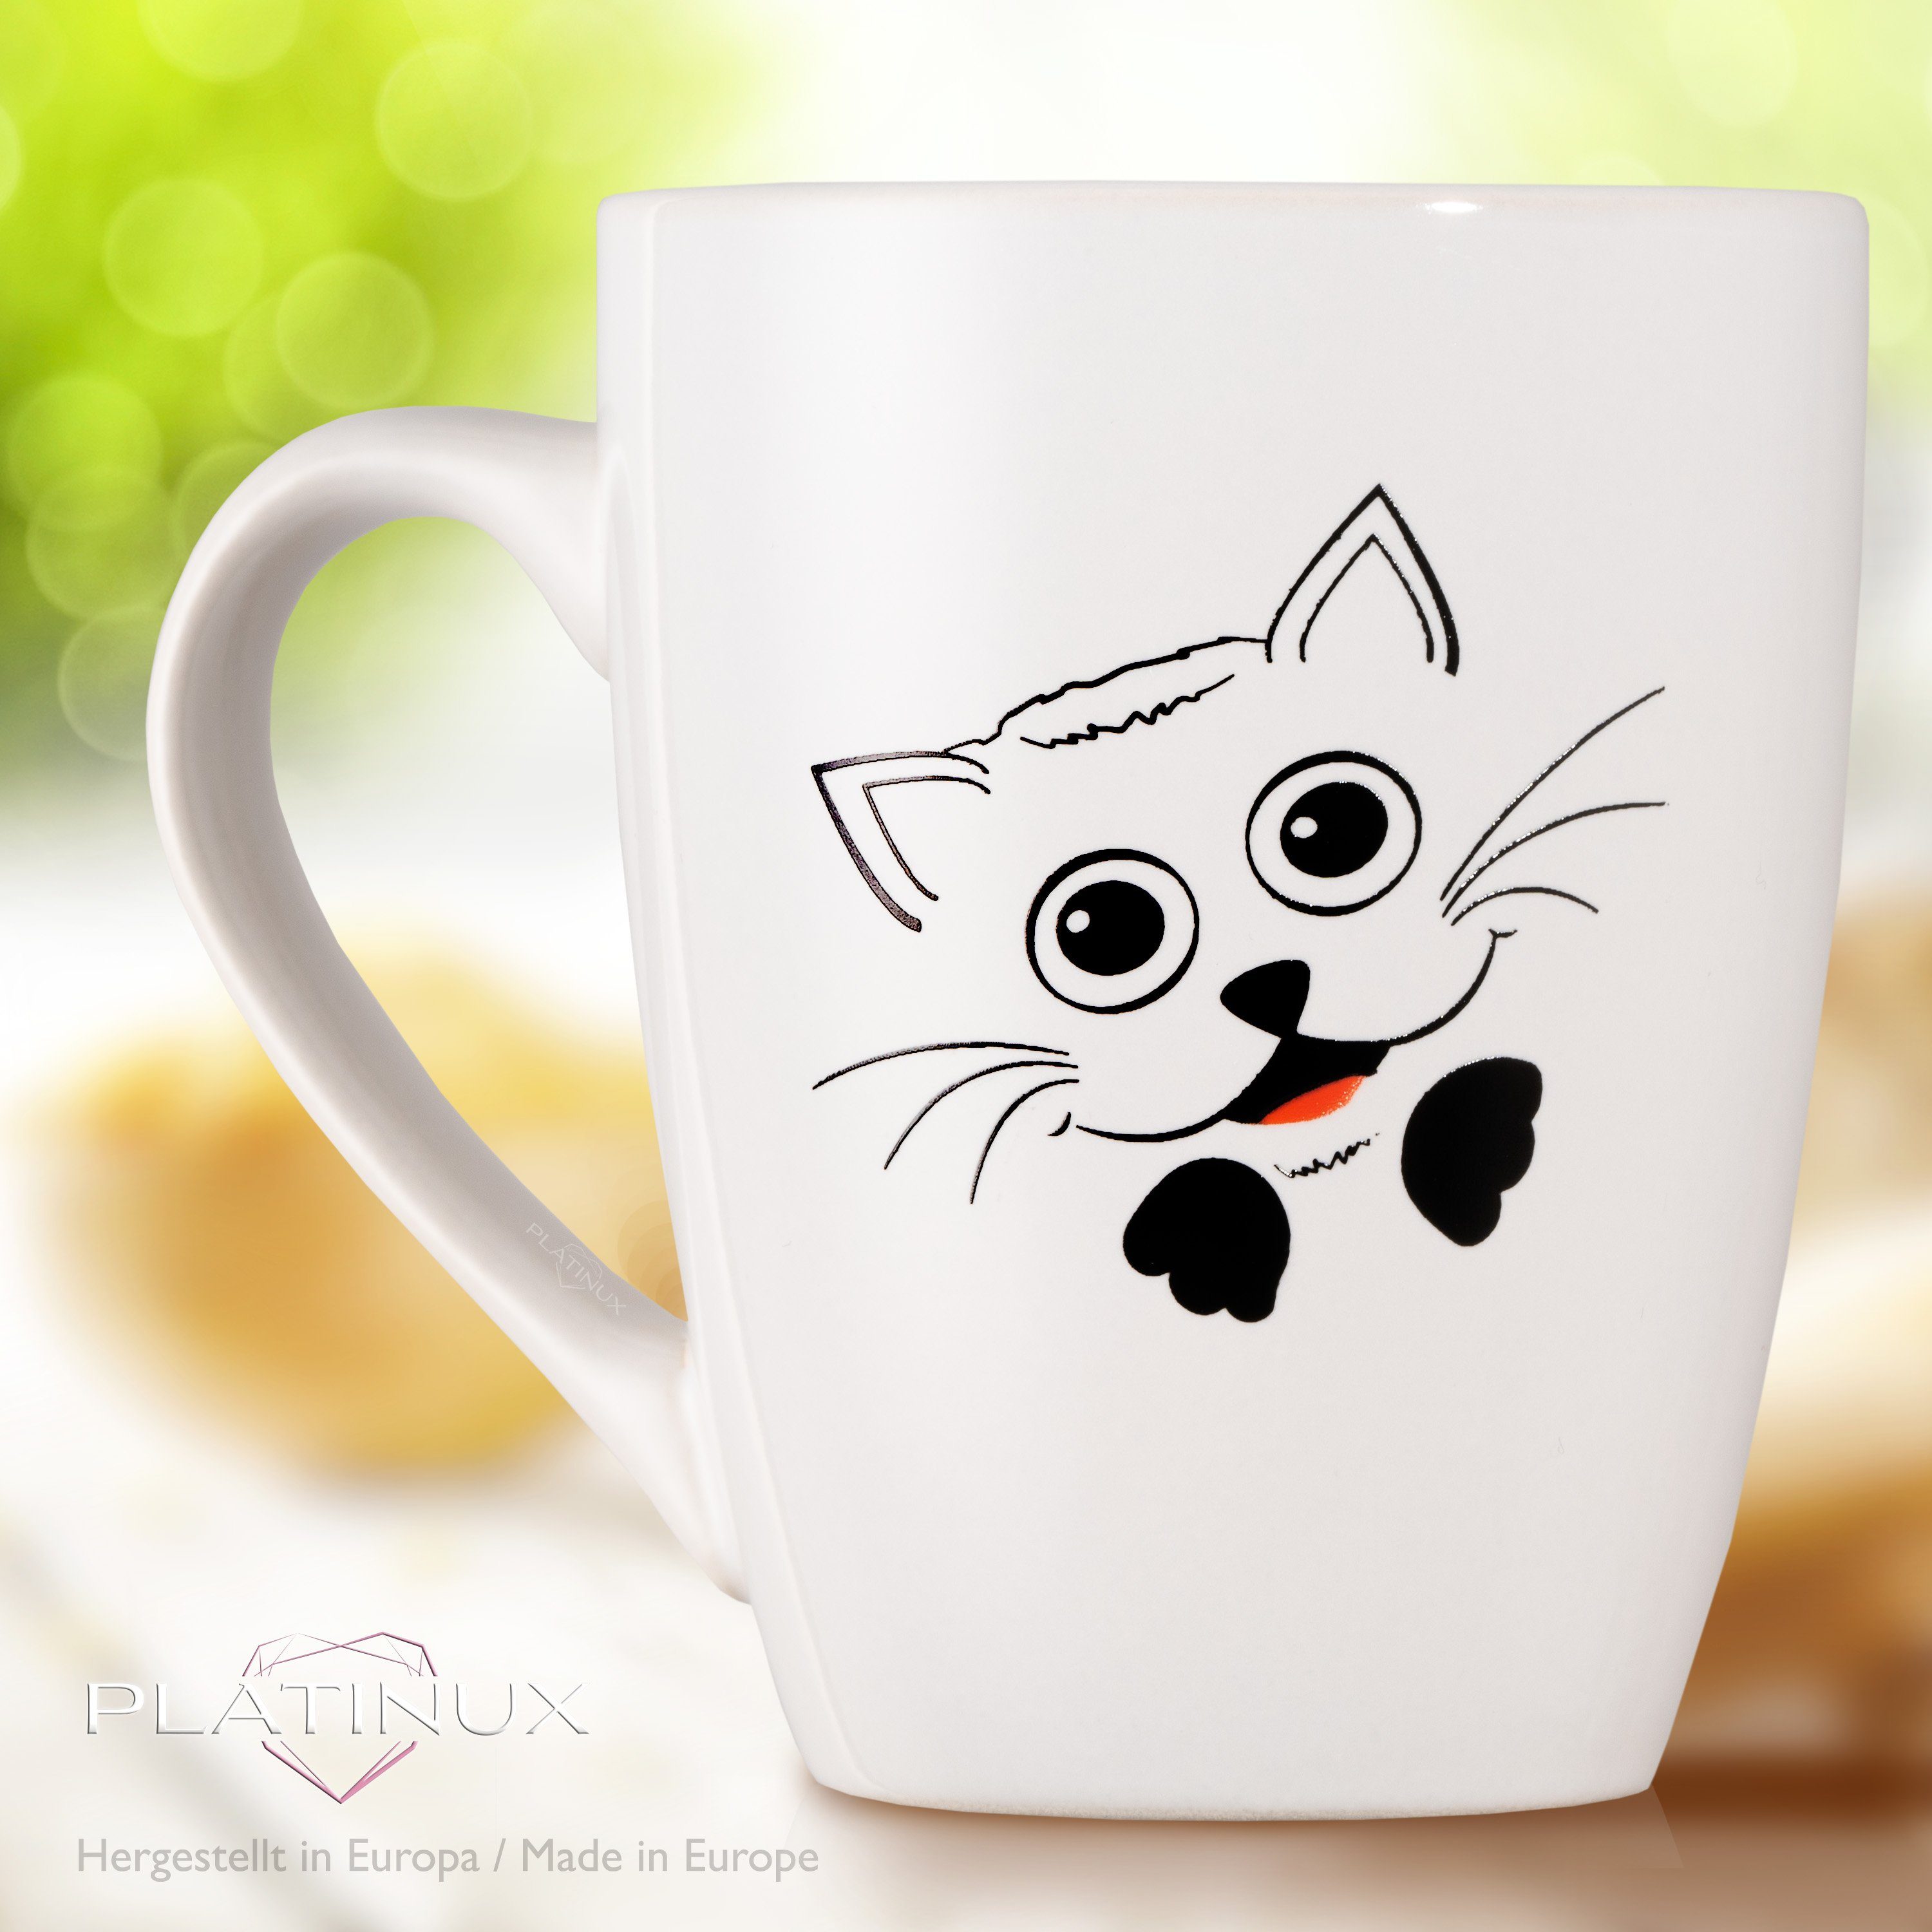 PLATINUX Tasse Kaffeetasse Teetasse Kaffeebecher mit Keramik 250ml, "Felix" Griff 300ml) Tasse Katzen Teebecher mit (max. Motiv Keramik